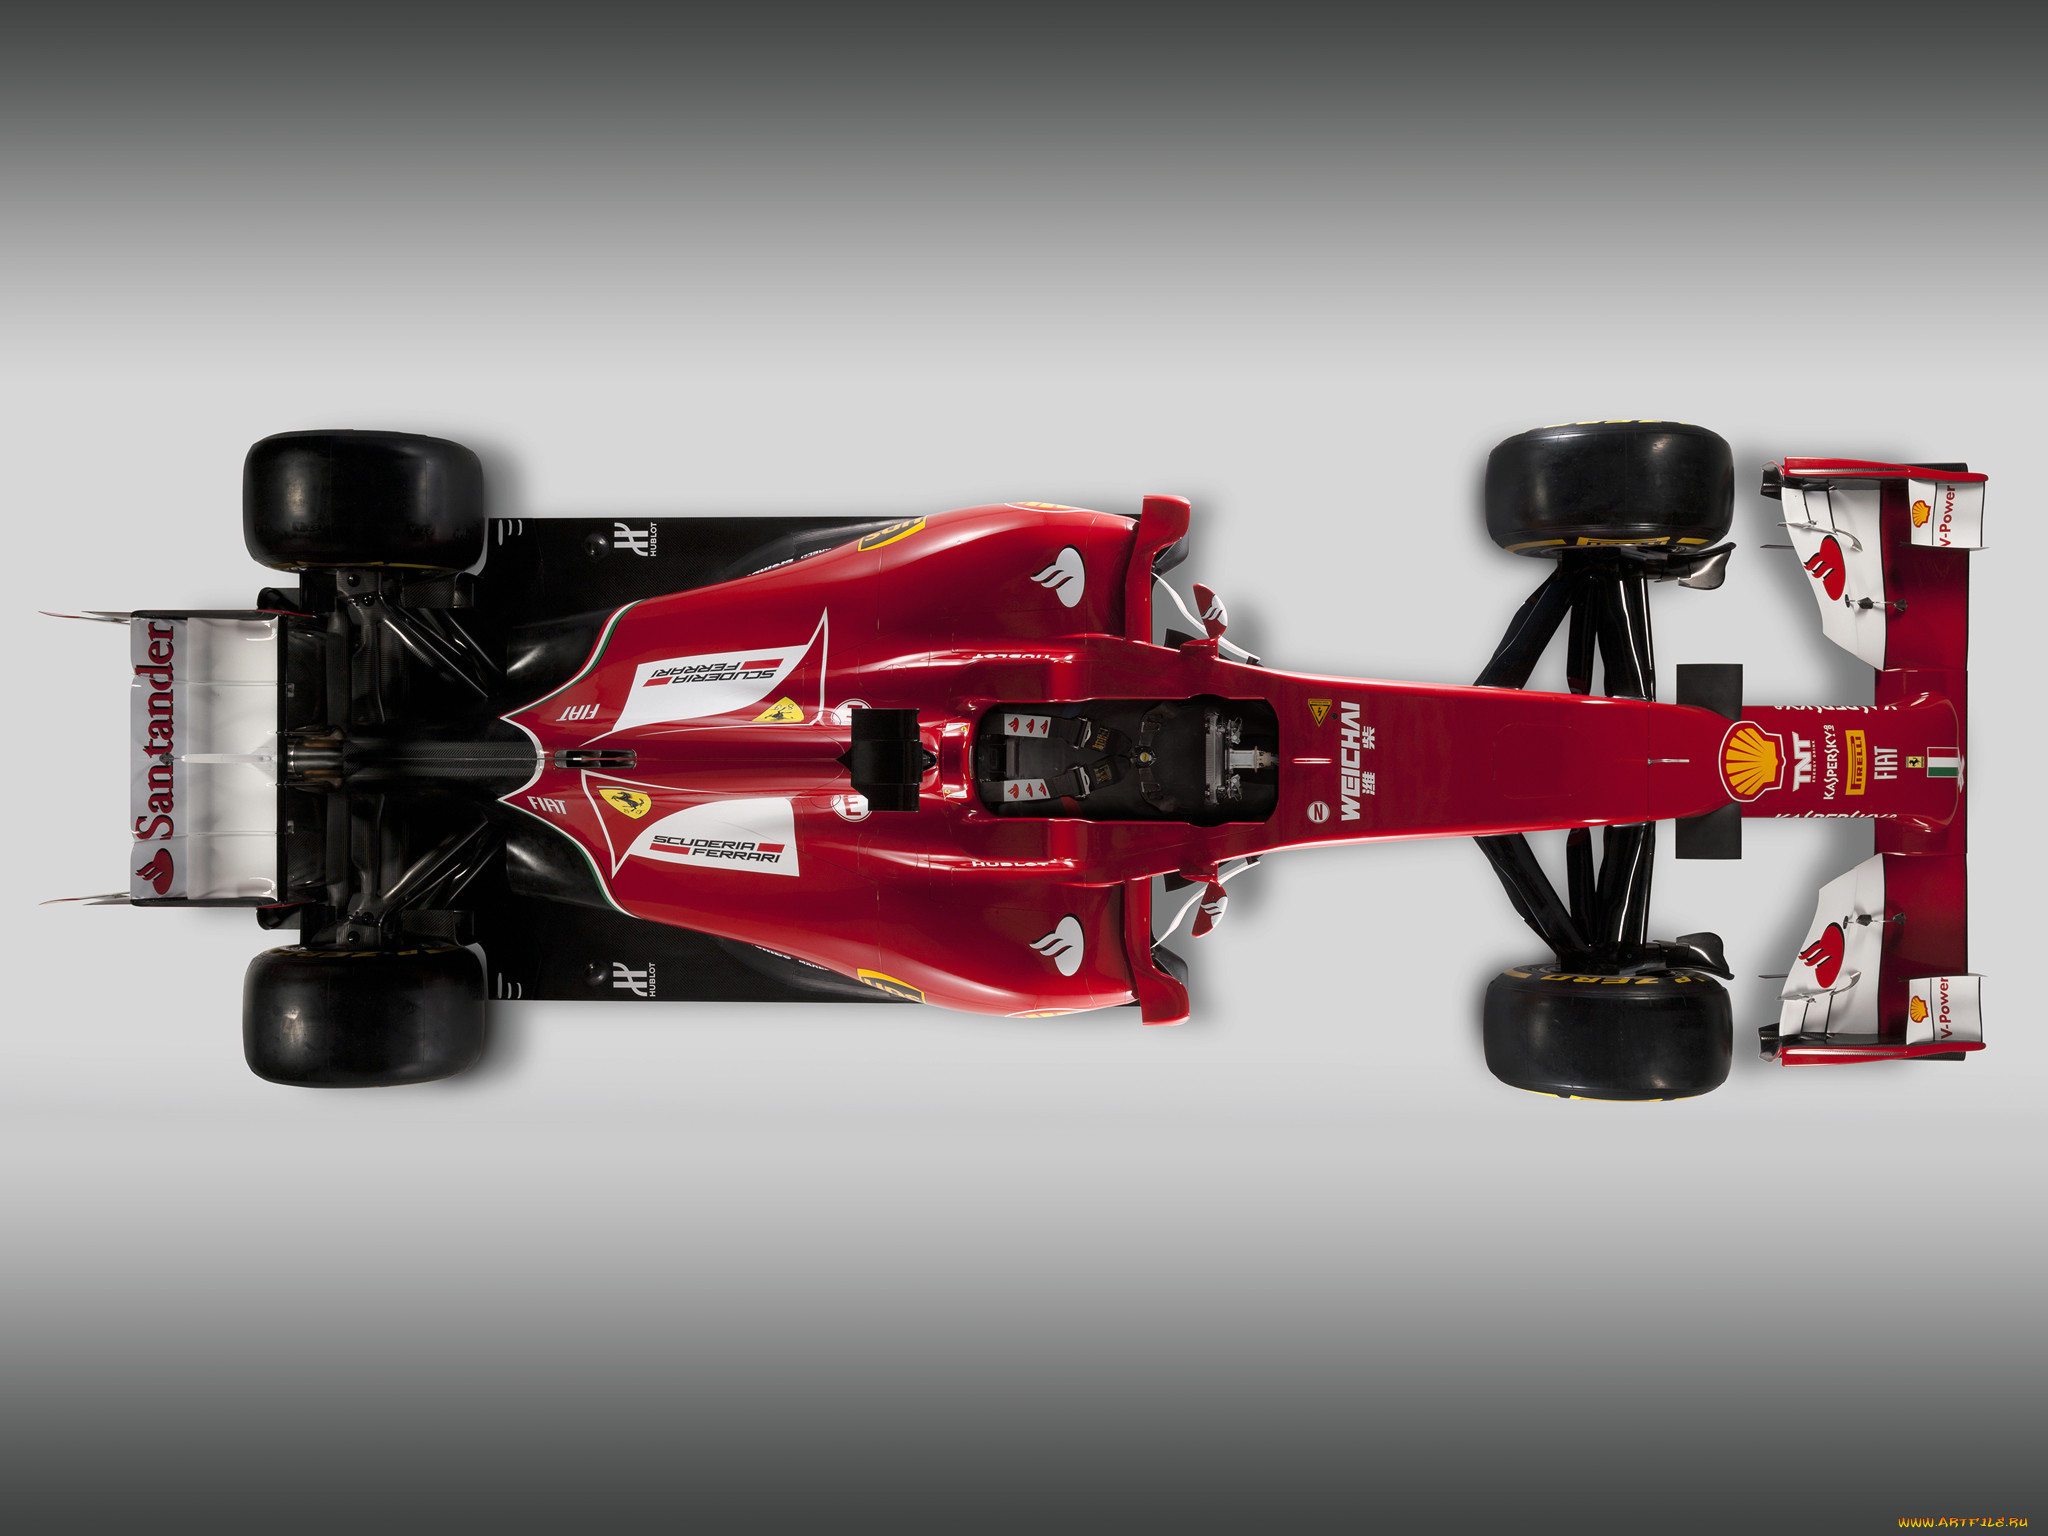 Ferrari t80. SF 138 Ferrari. Ferrari f138 2013 характеристики описание. Longjia Formula 150.